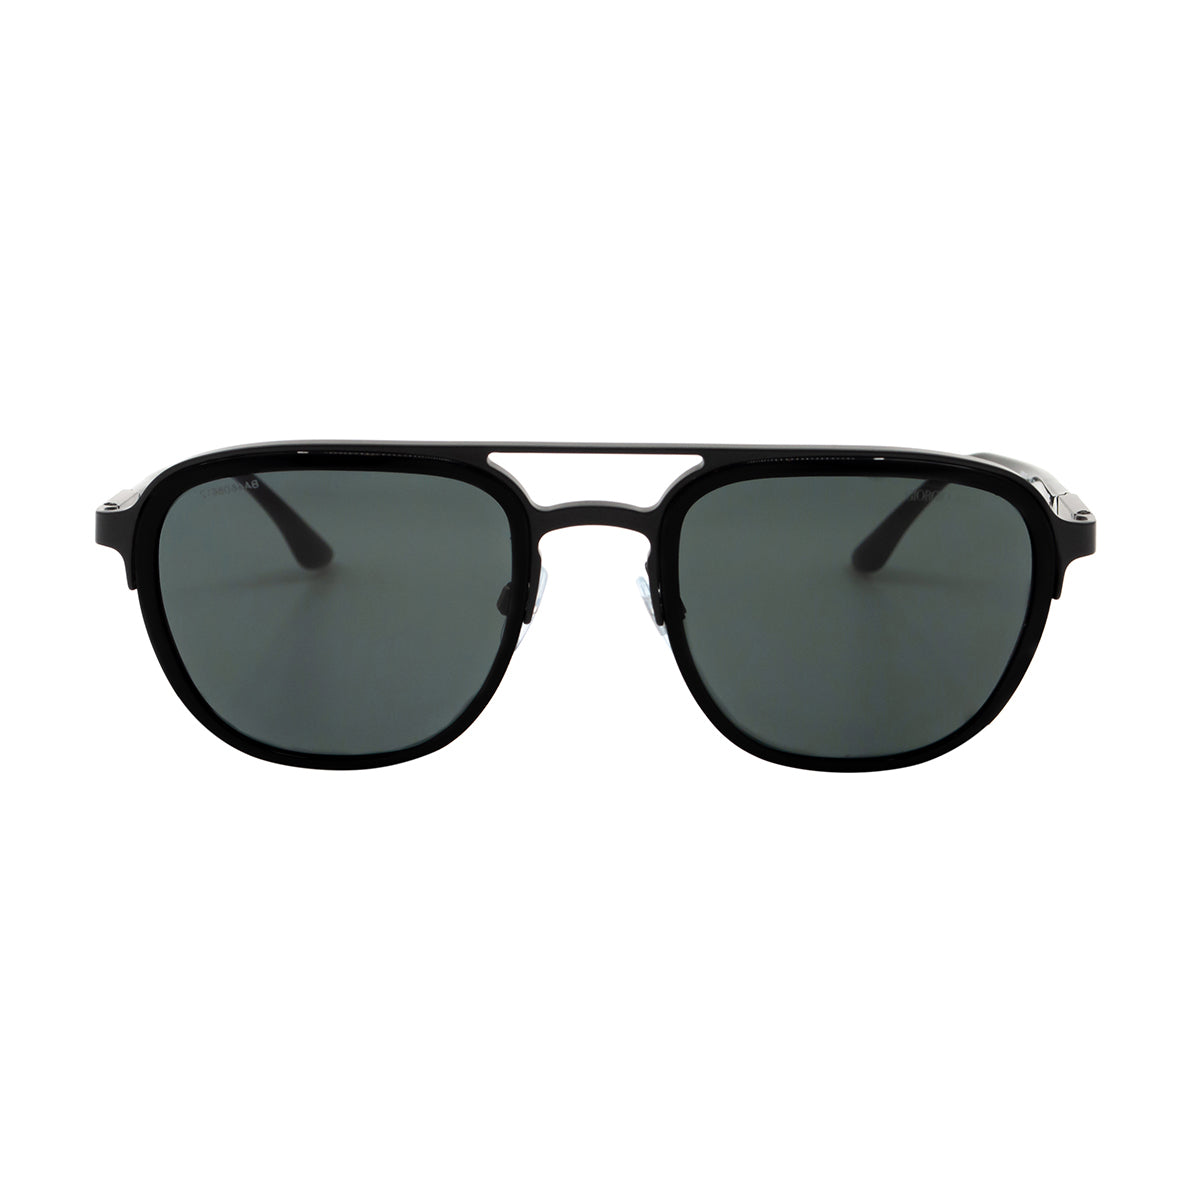 Emporio Armani Sunglasses EA 4029 5063/8G Black India | Ubuy